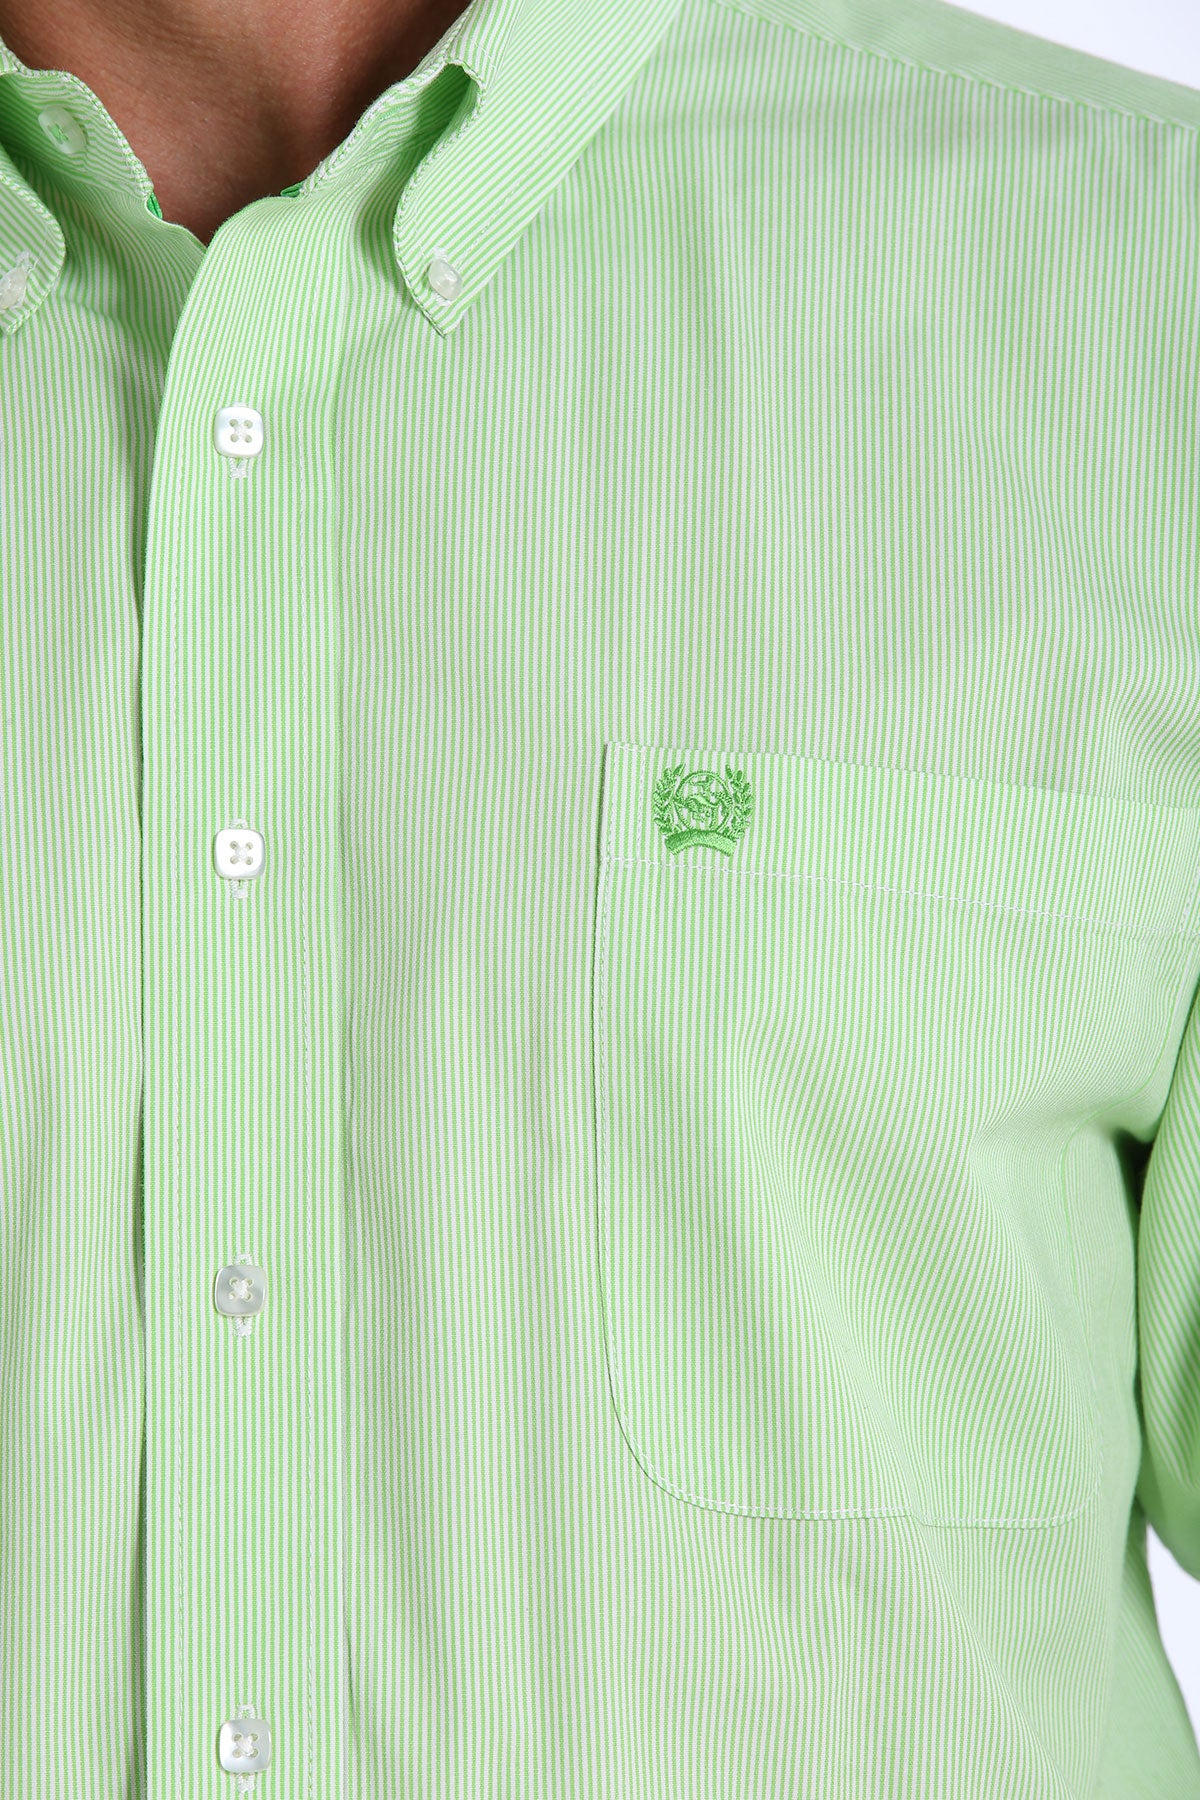 Cinch Men's Lime Green Pinstripe Button-Down Shirt